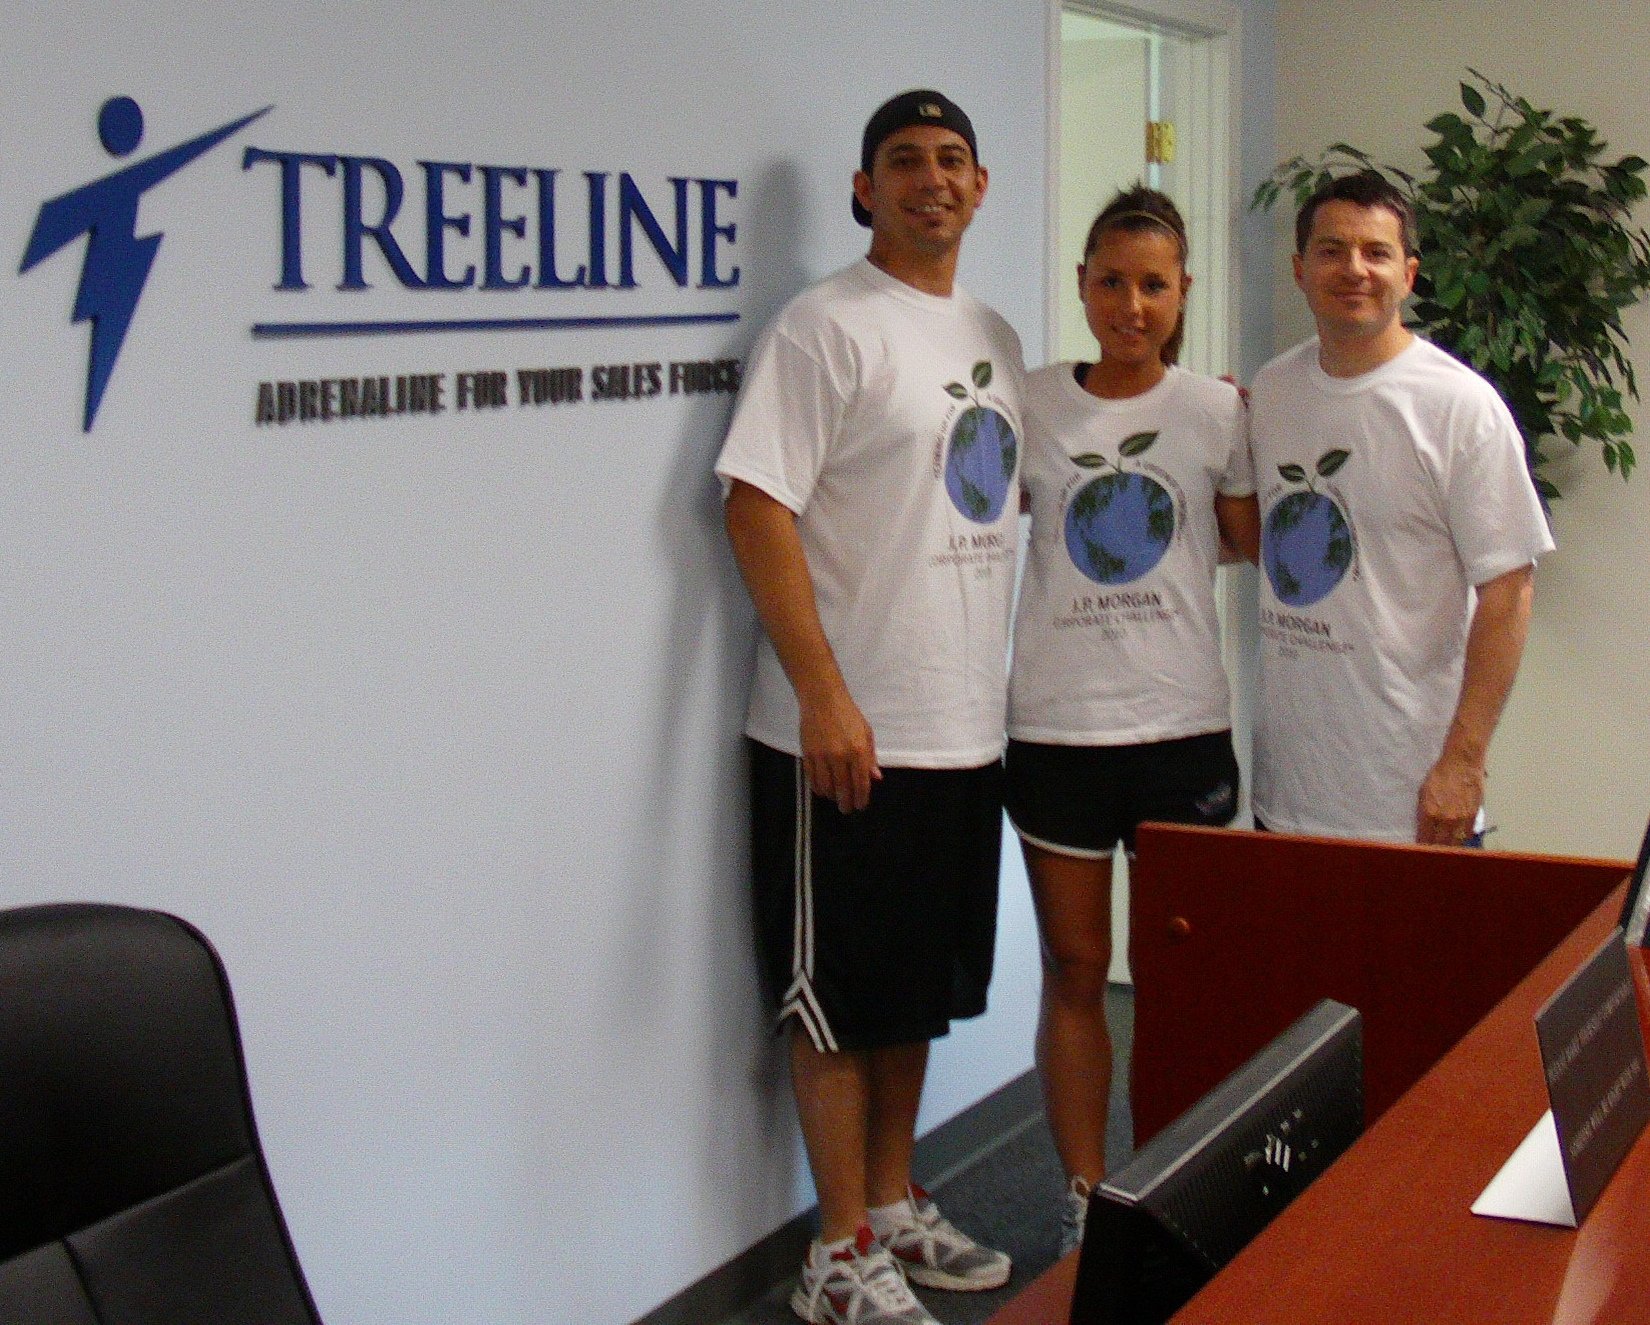 Treeline Inc named as a member of the Dana Farber Leadership council